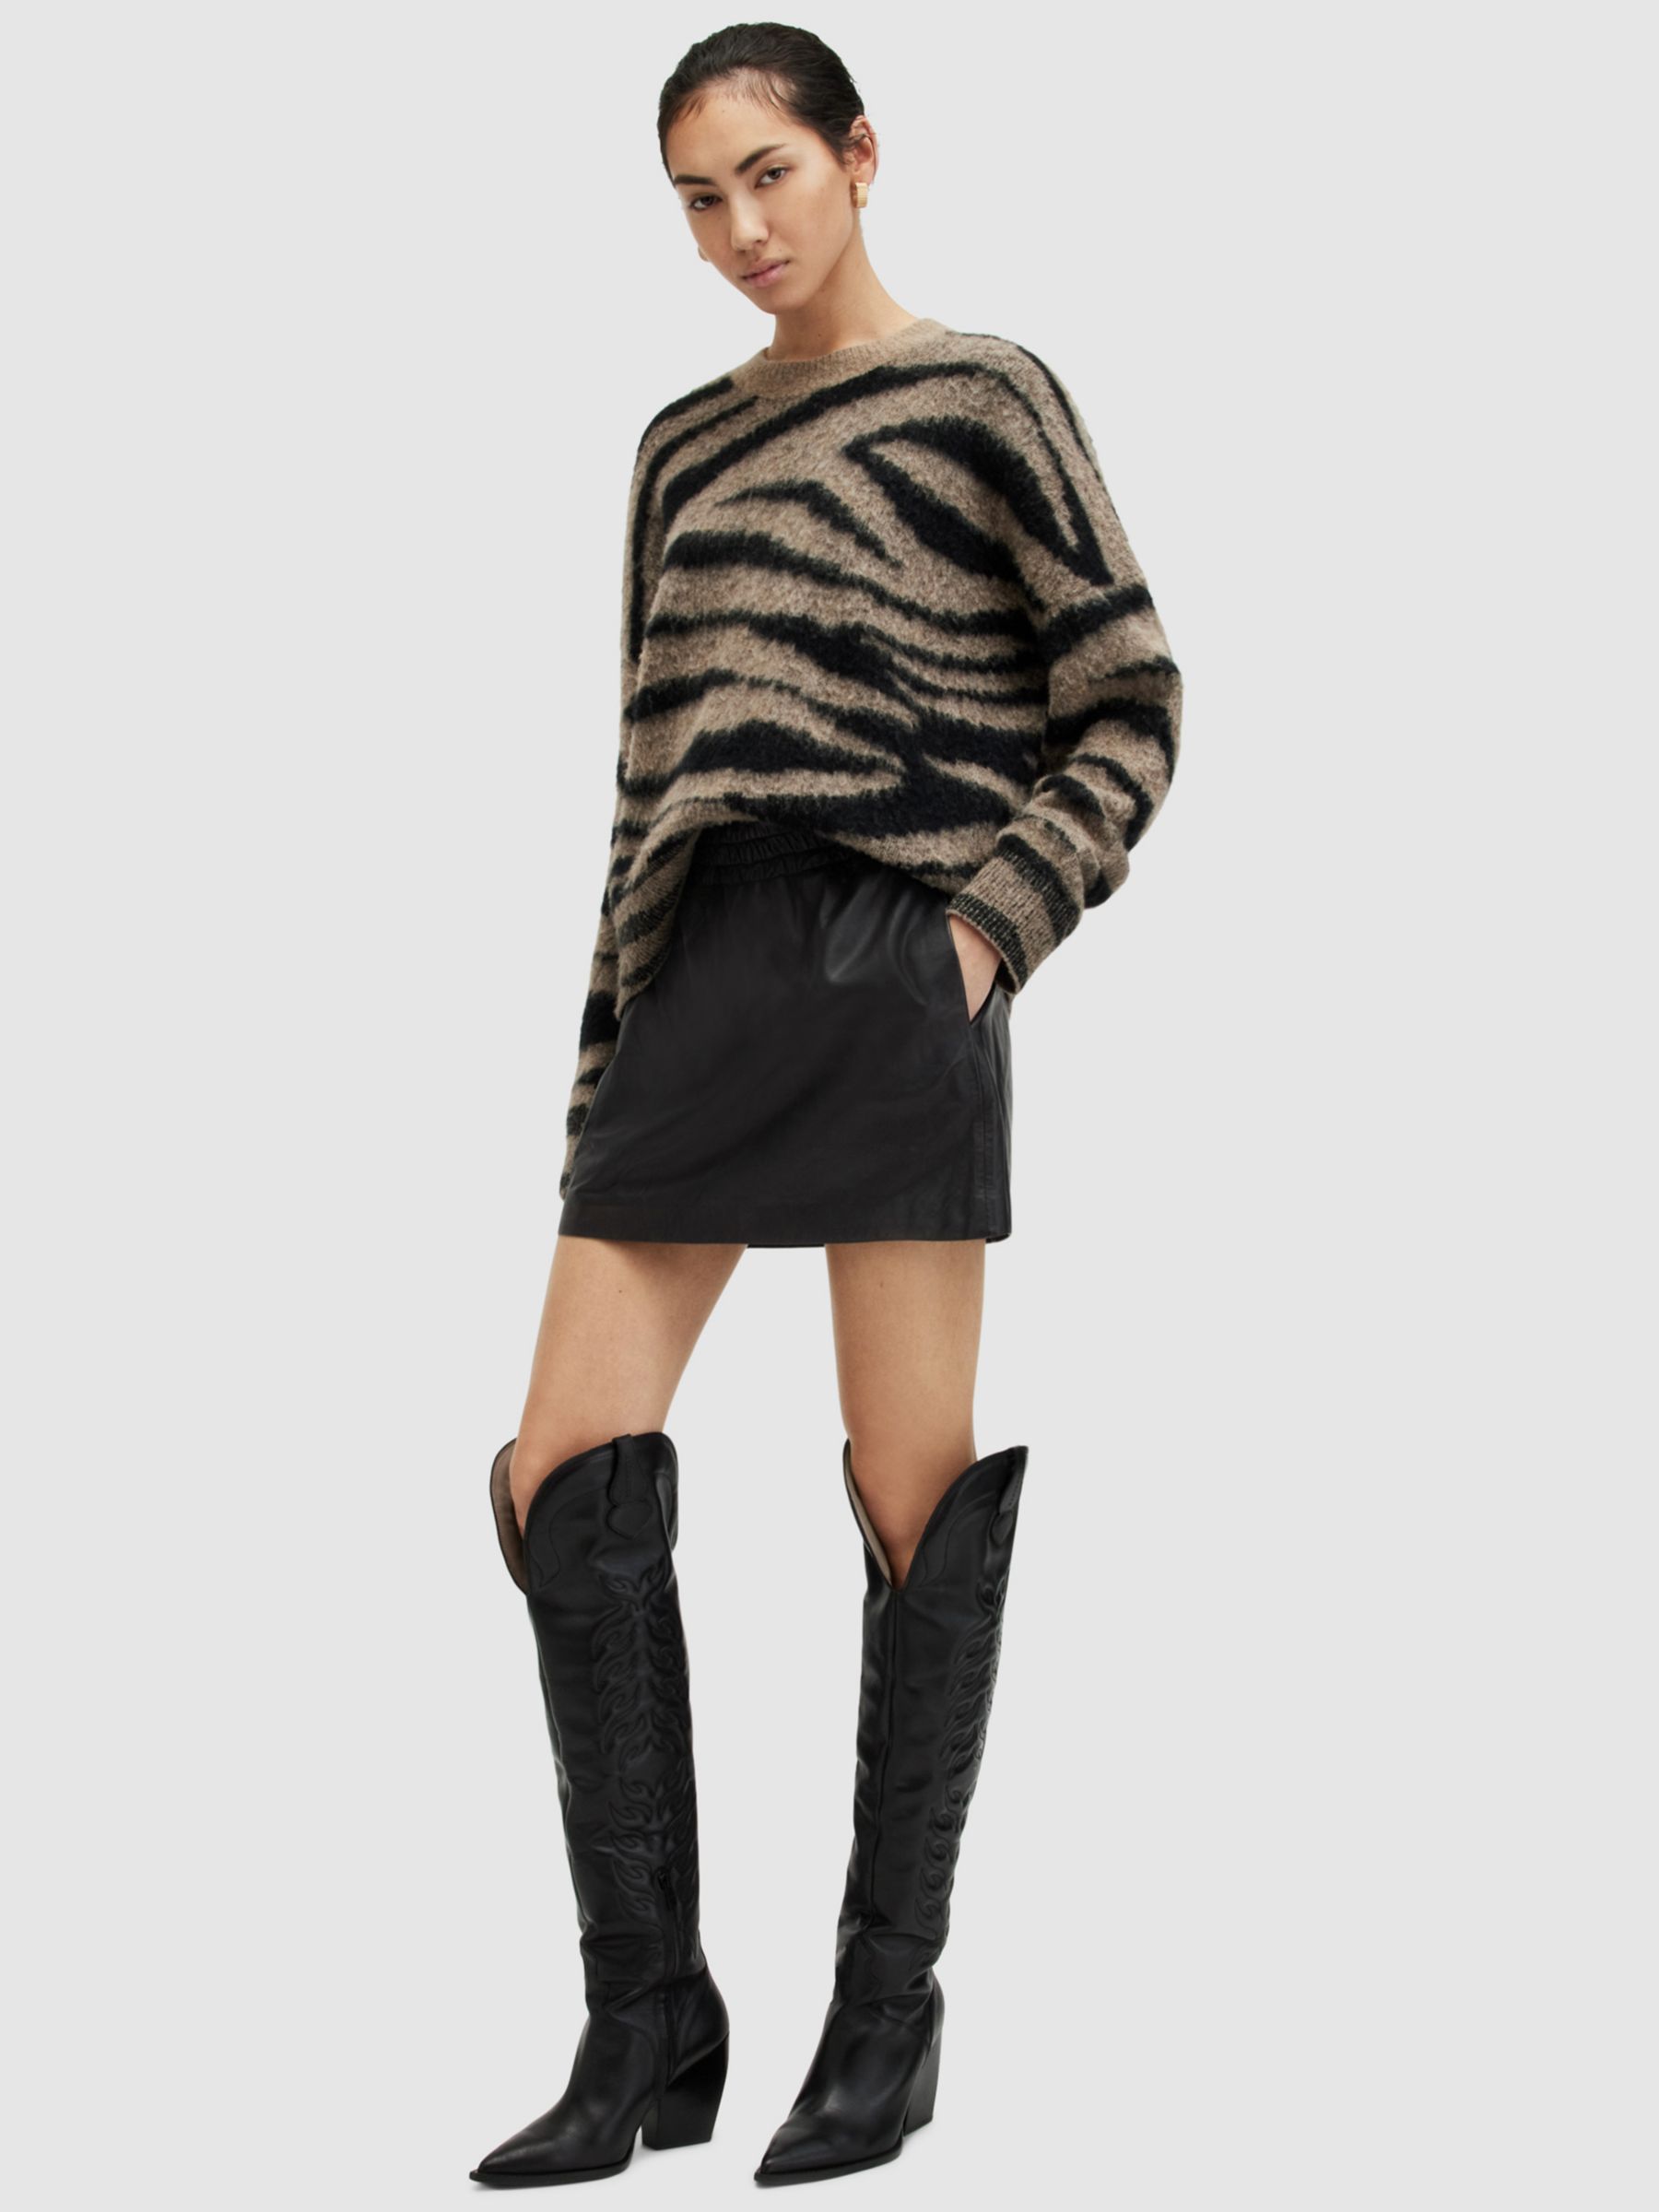 AllSaints Shana Leather Mini Skirt, Black, 6